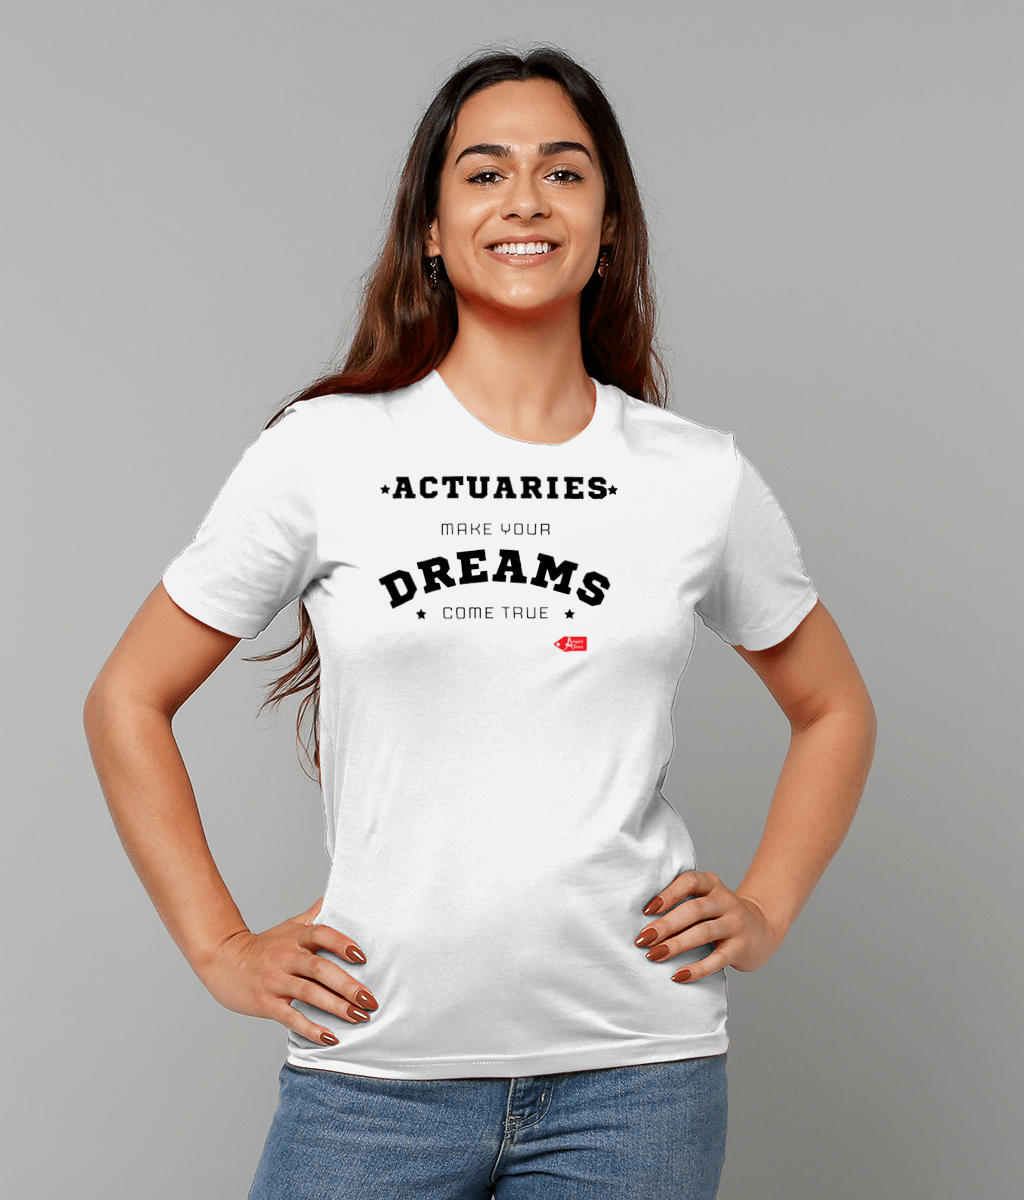 Actuaries Make Your Dreams Come True T-Shirt